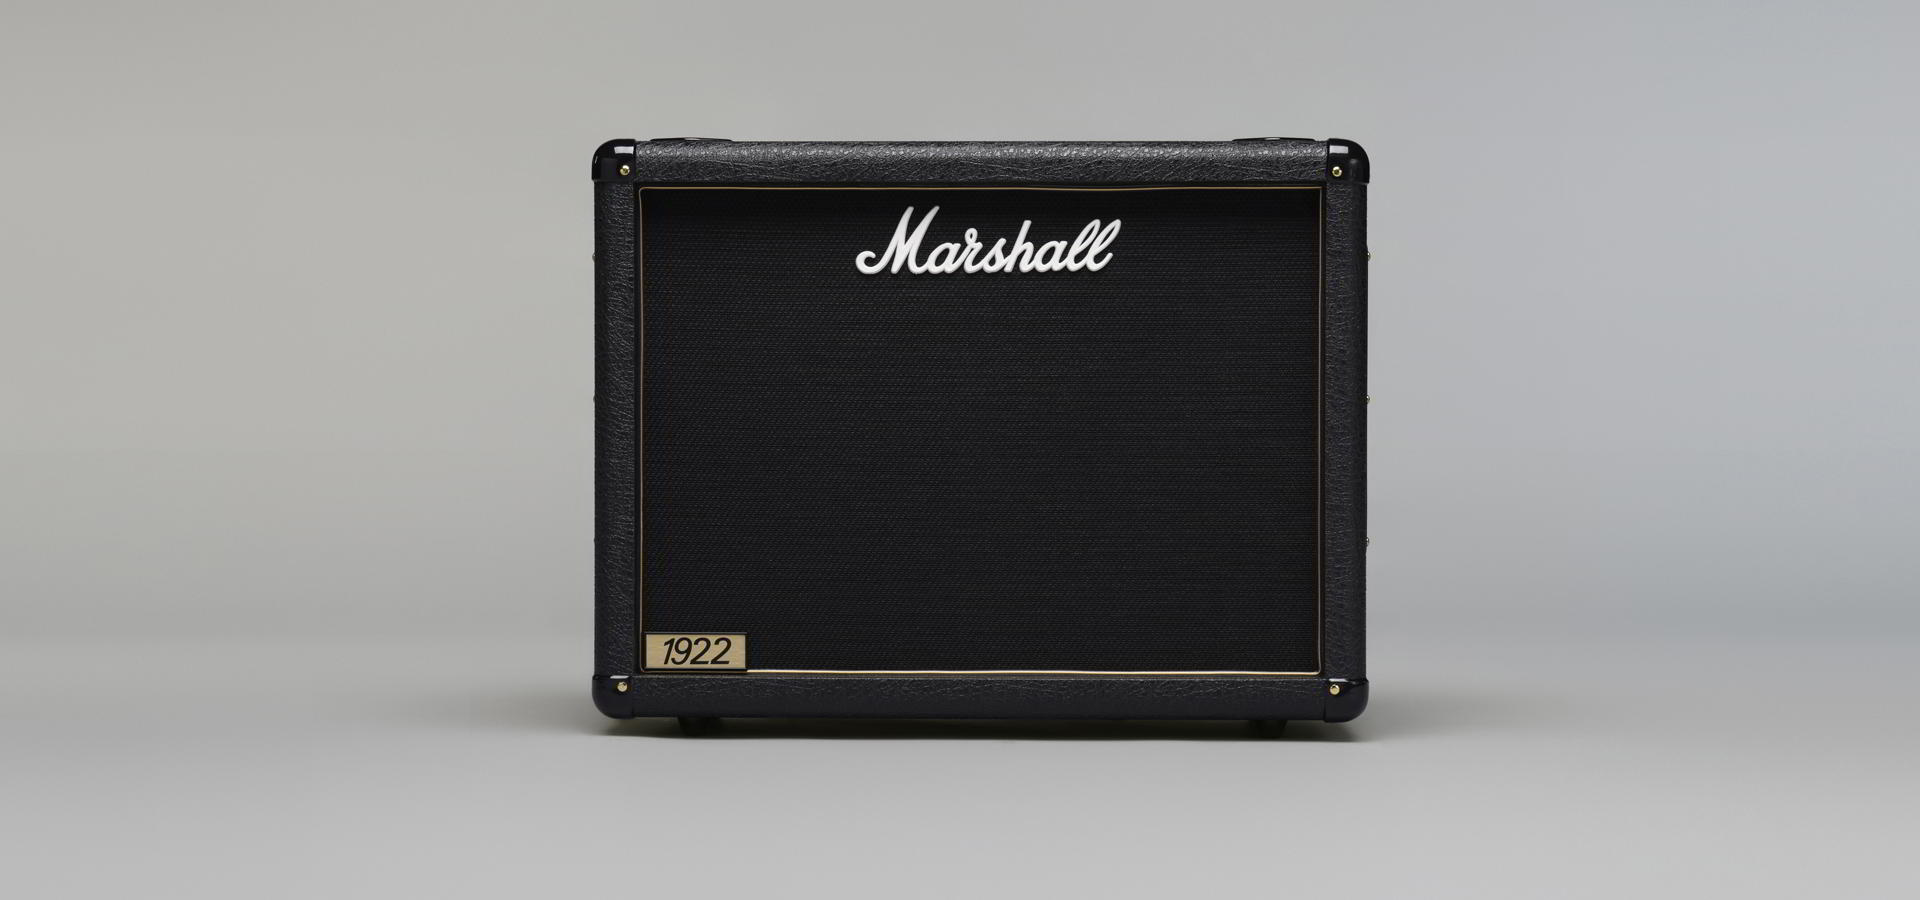 Marshall ギターアンプキャビネット1922新品即納可能です! | MUSIC